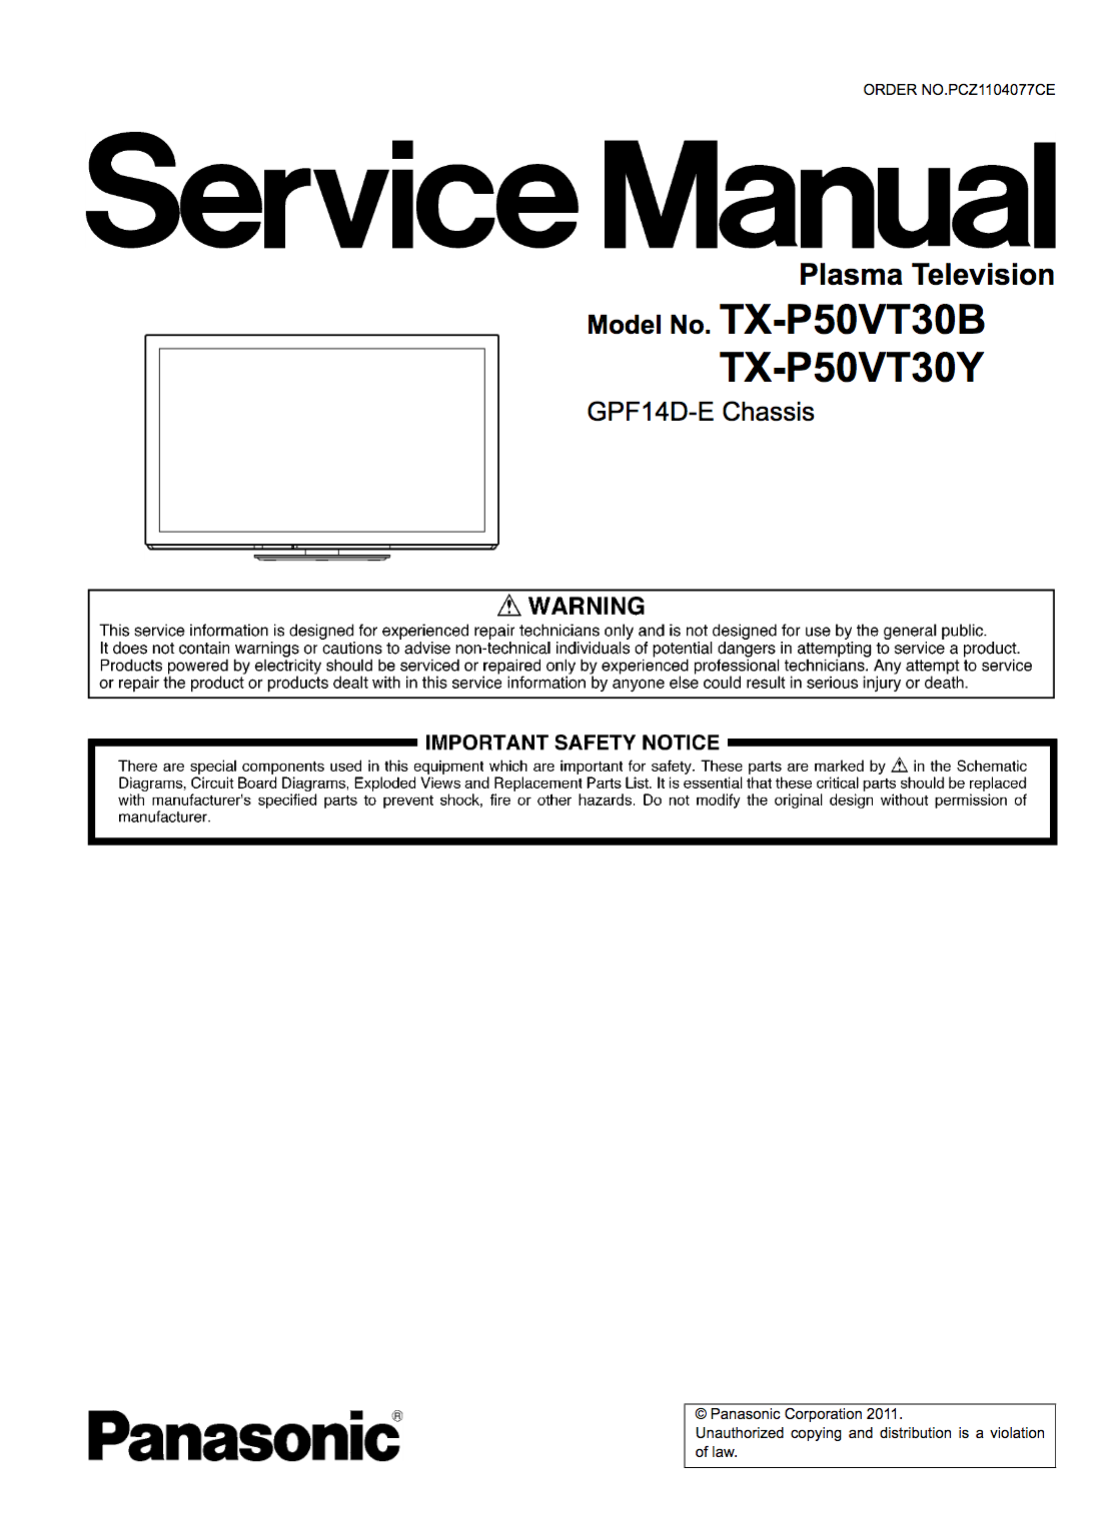 Panasonic TX-P50VT30B/Y Service Manual